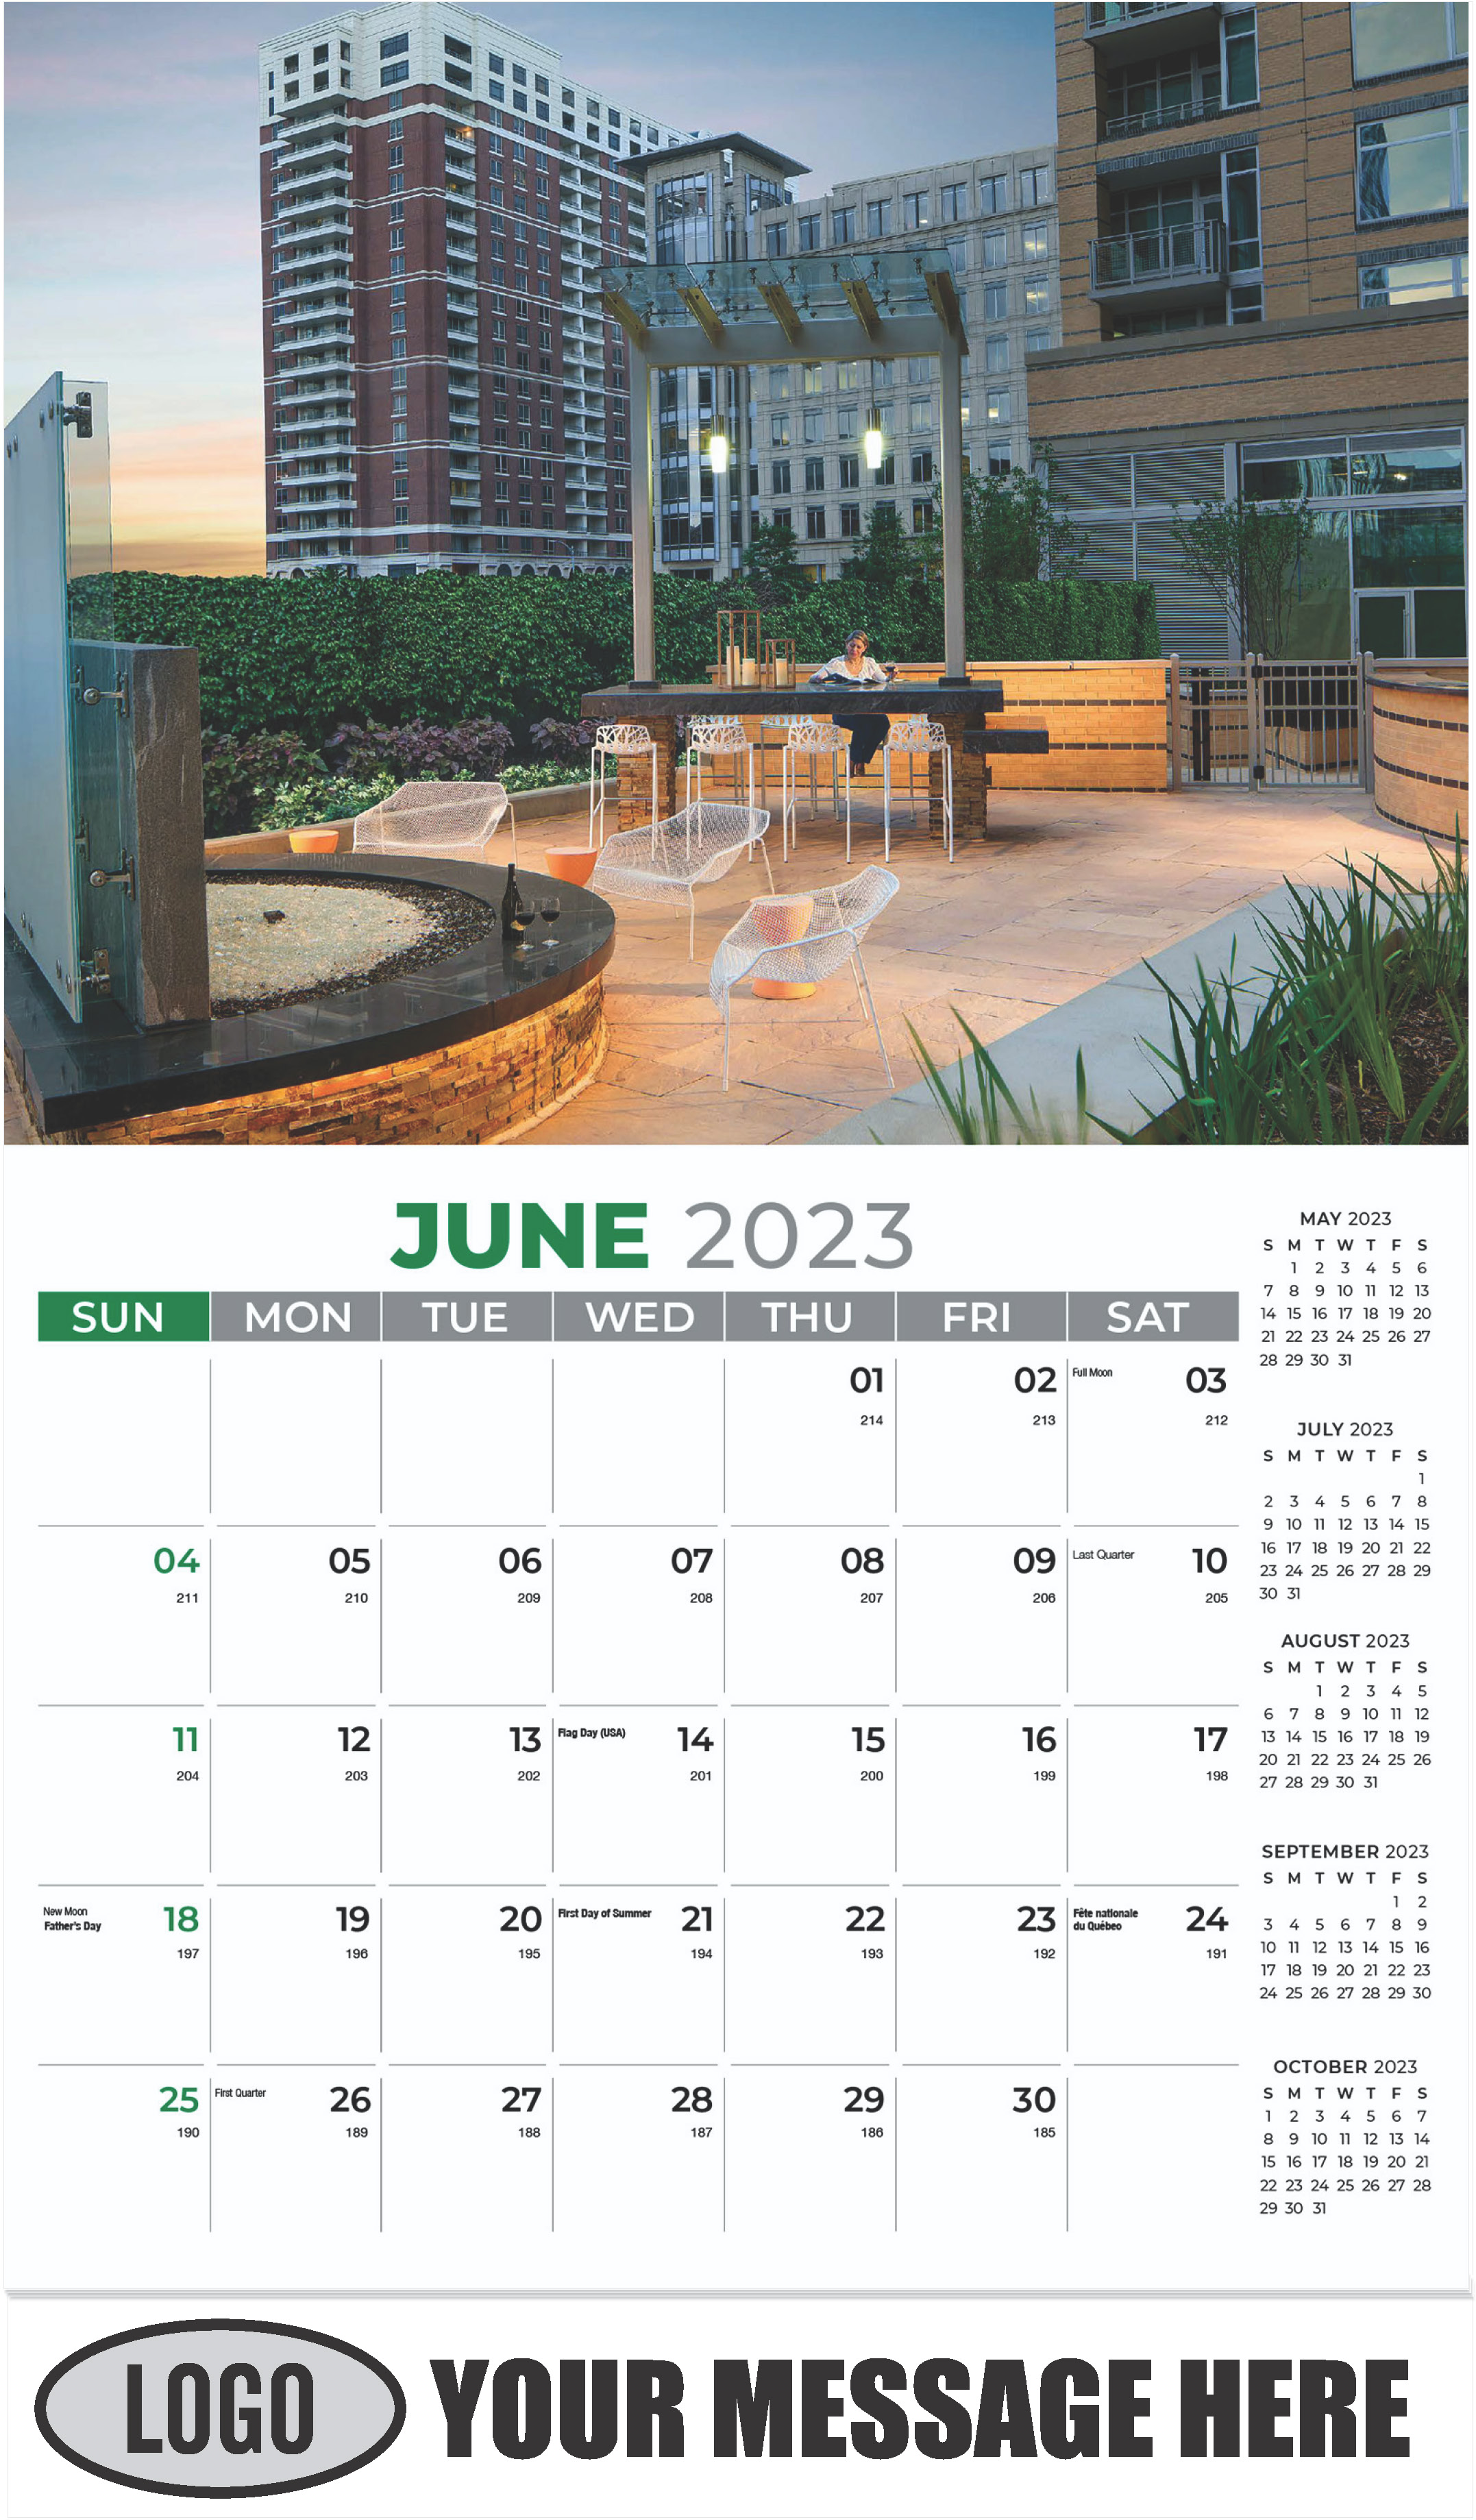 Luxury Homes Calendar - June - Homes 2023 Promotional Calendar